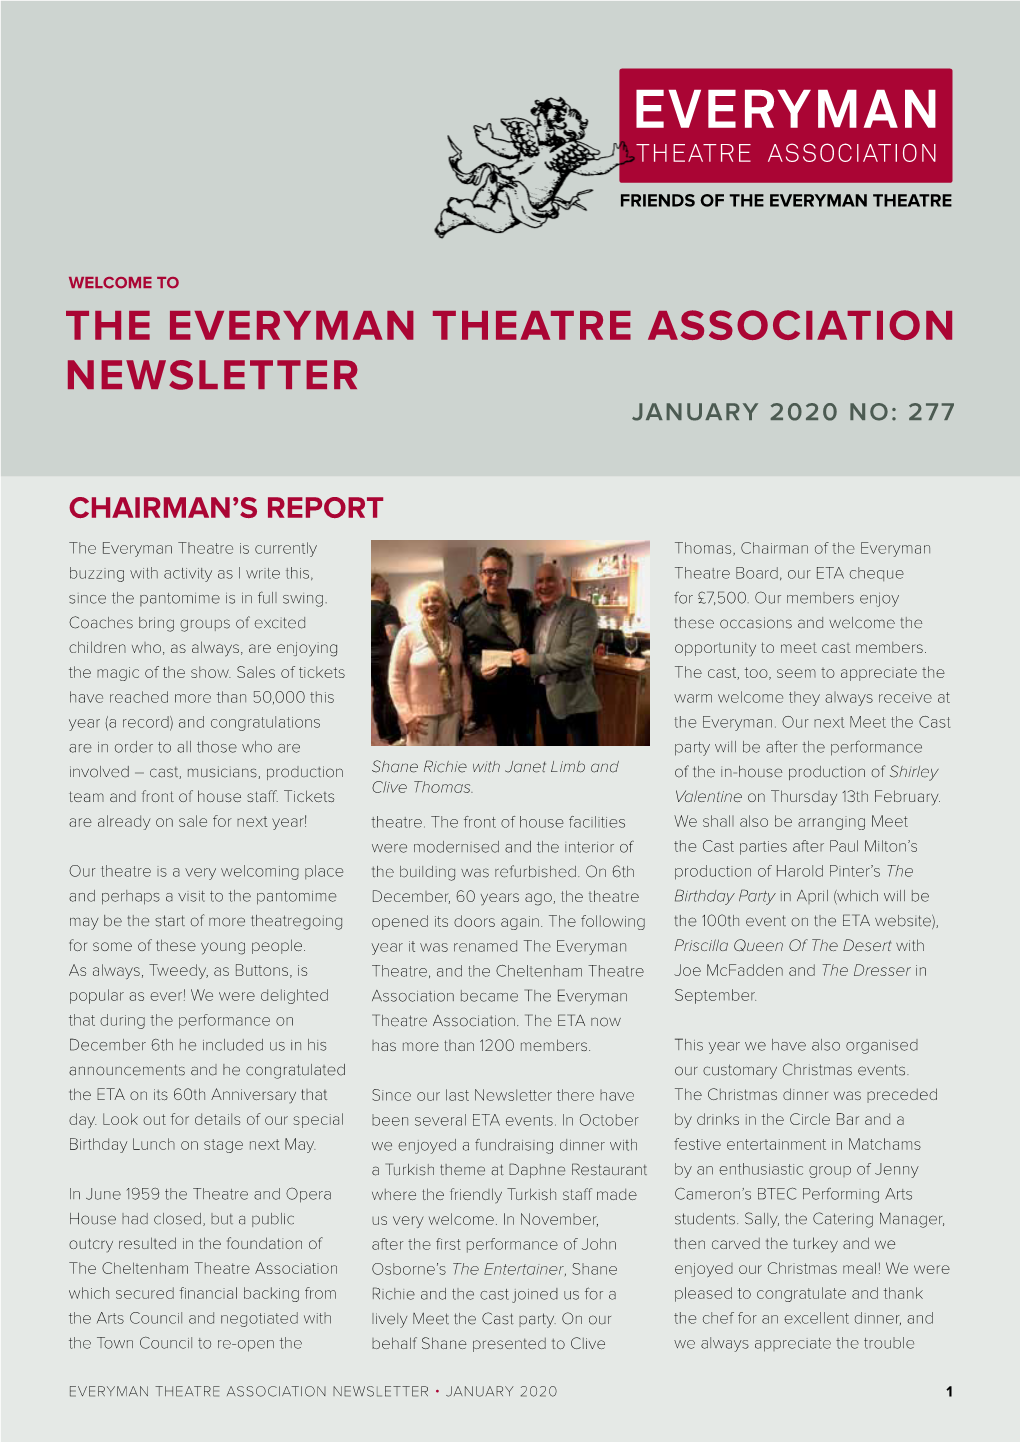 The Everyman Theatre Association Newsletter January 2020 No: 277